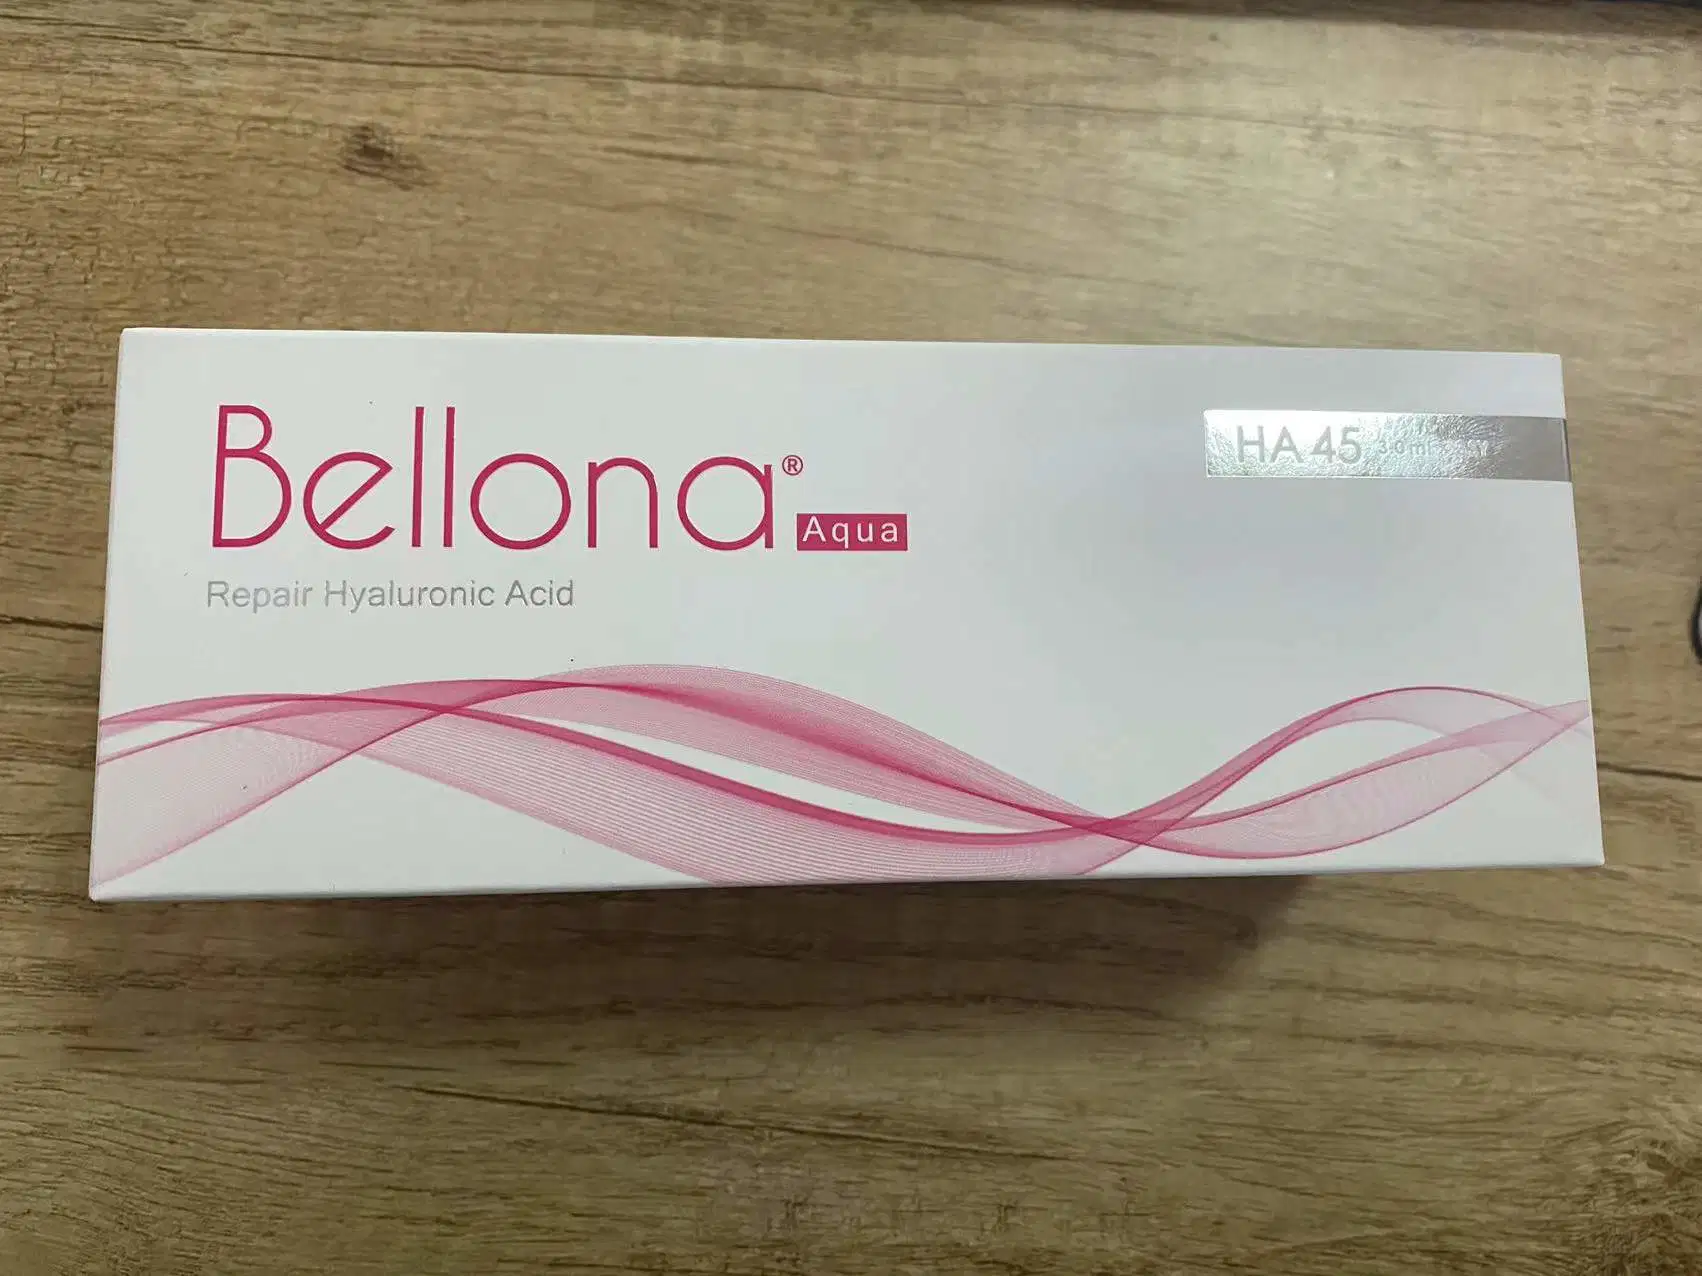 Bellona Aqua Filler 45mg Cross Linked Ha South Korea for Hydrafacial Treatment at Home Near Me Price